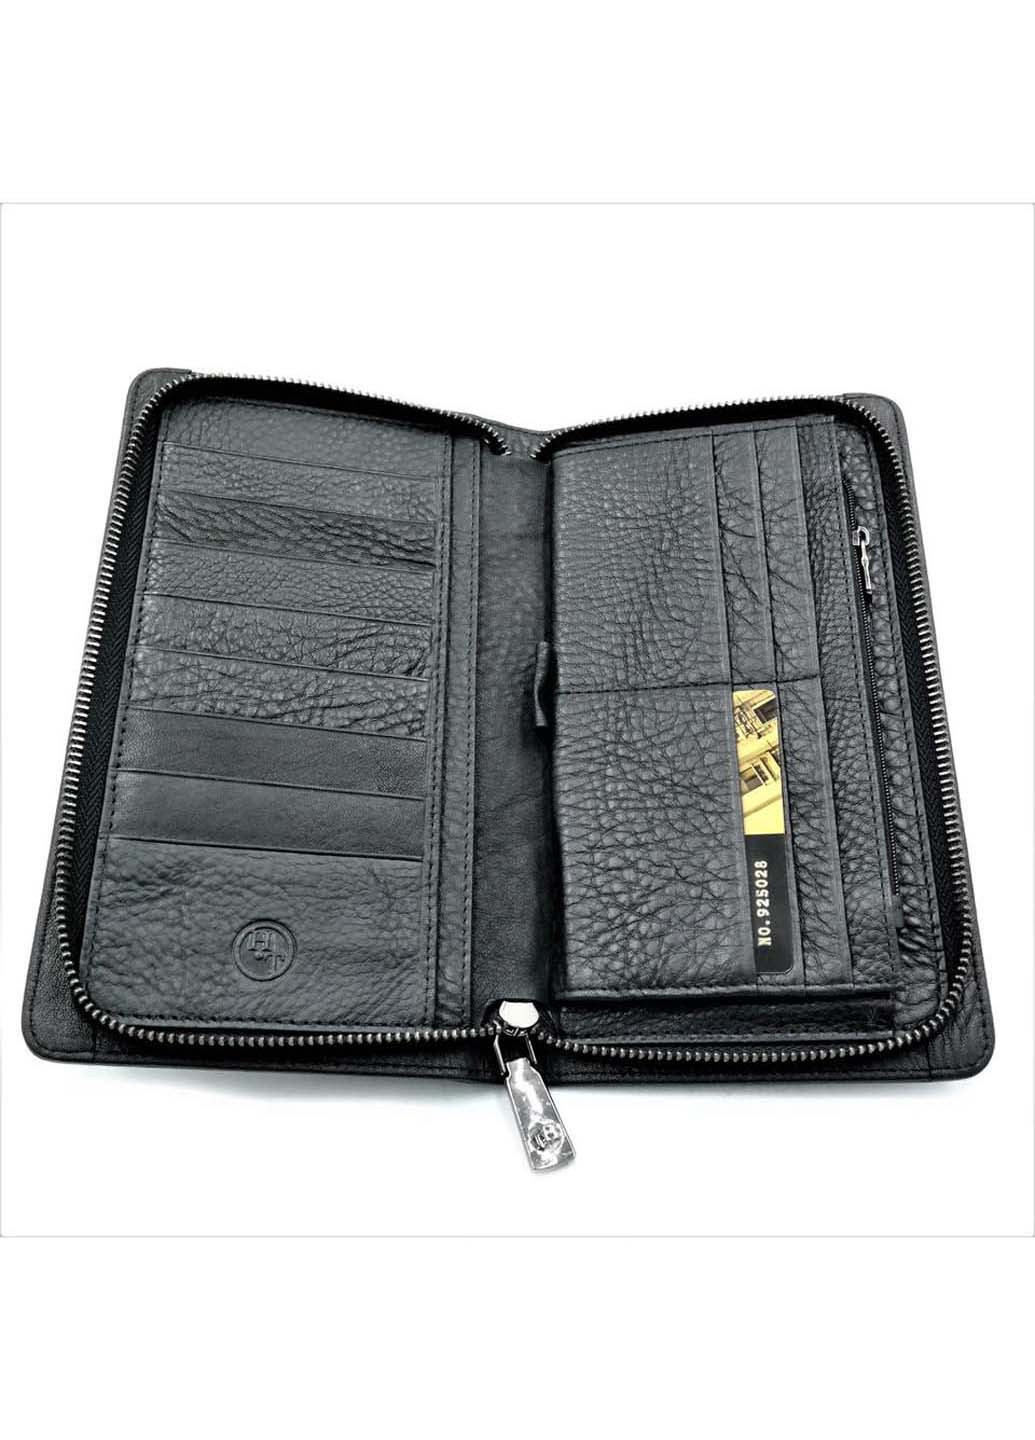 Клатч-гаманець 22,5 х 12,5 х 3 см Weatro (254844630)